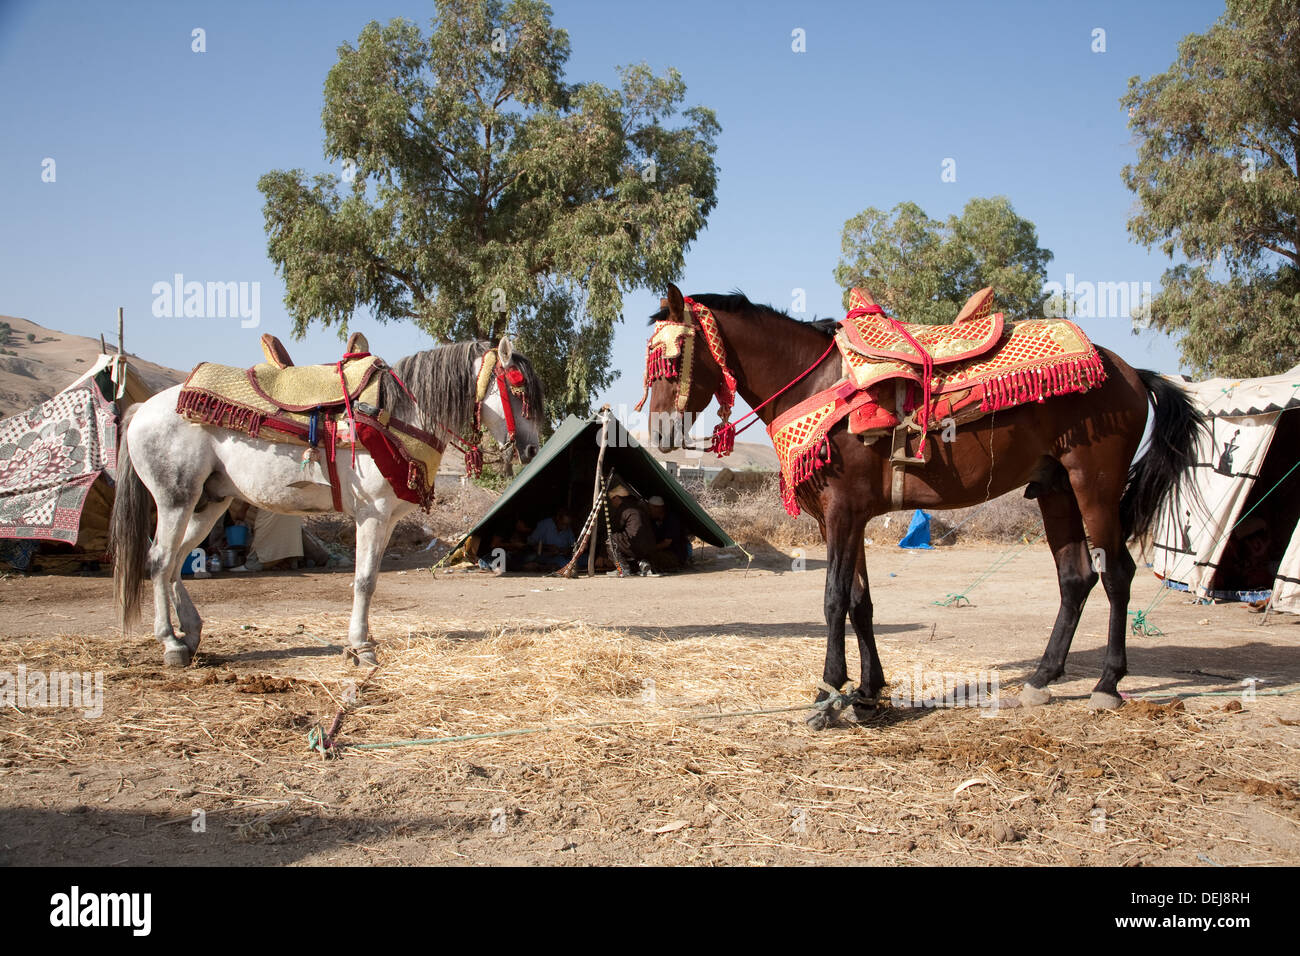 Encampment at the Tissa horse festival near Fez, Morocco Stock Photo